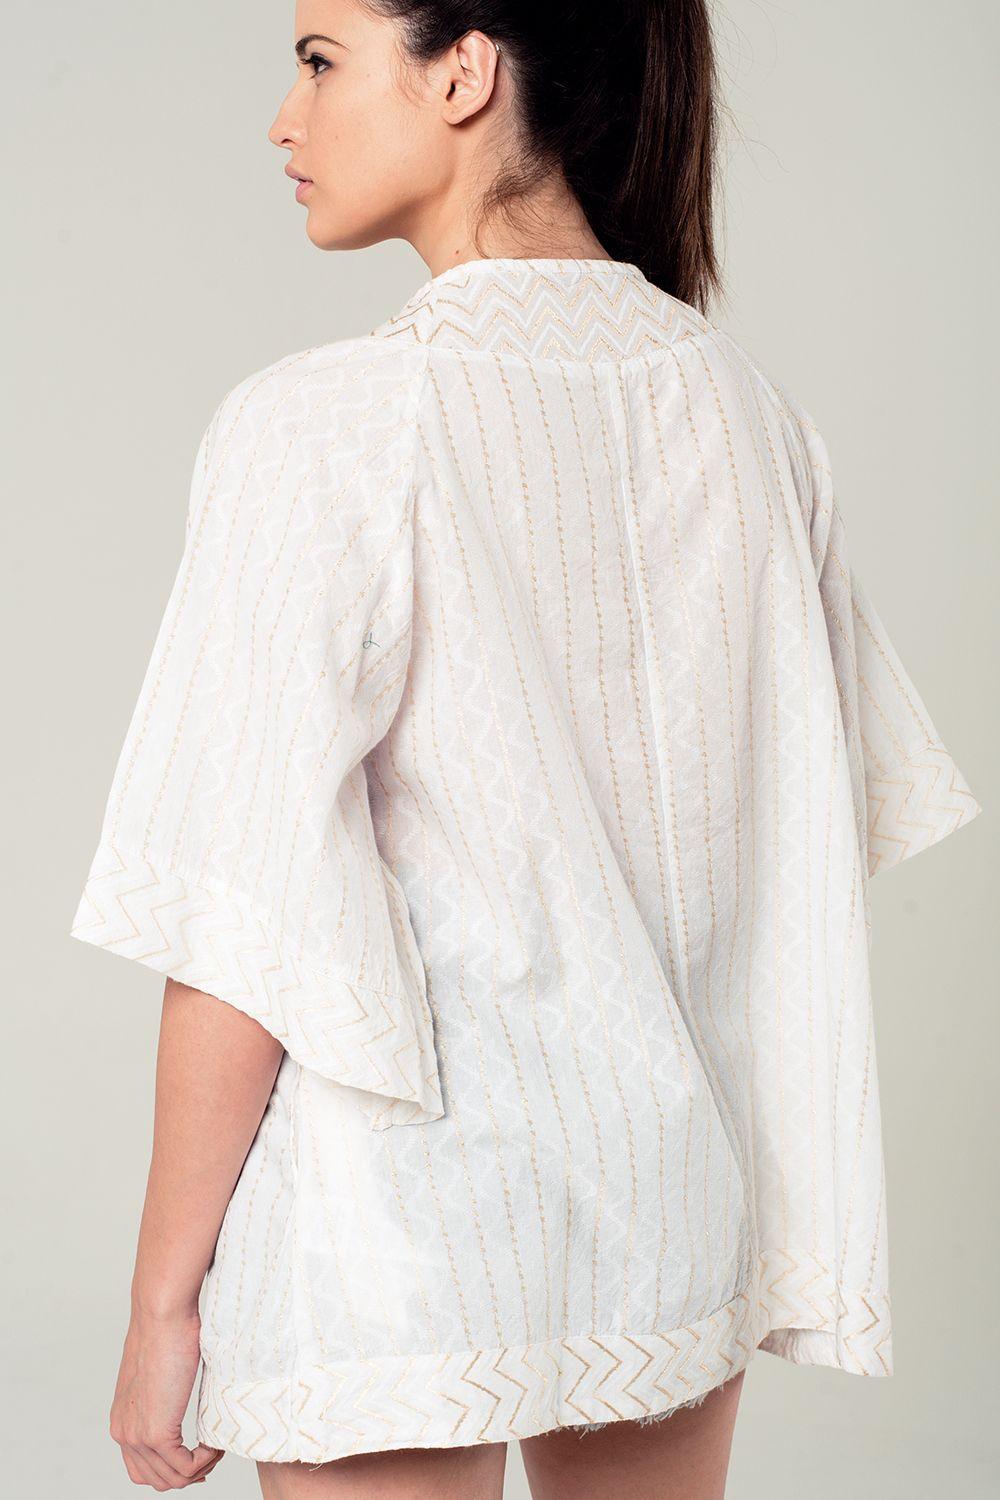 Embellished white mini dress with embroidery detailing Szua Store